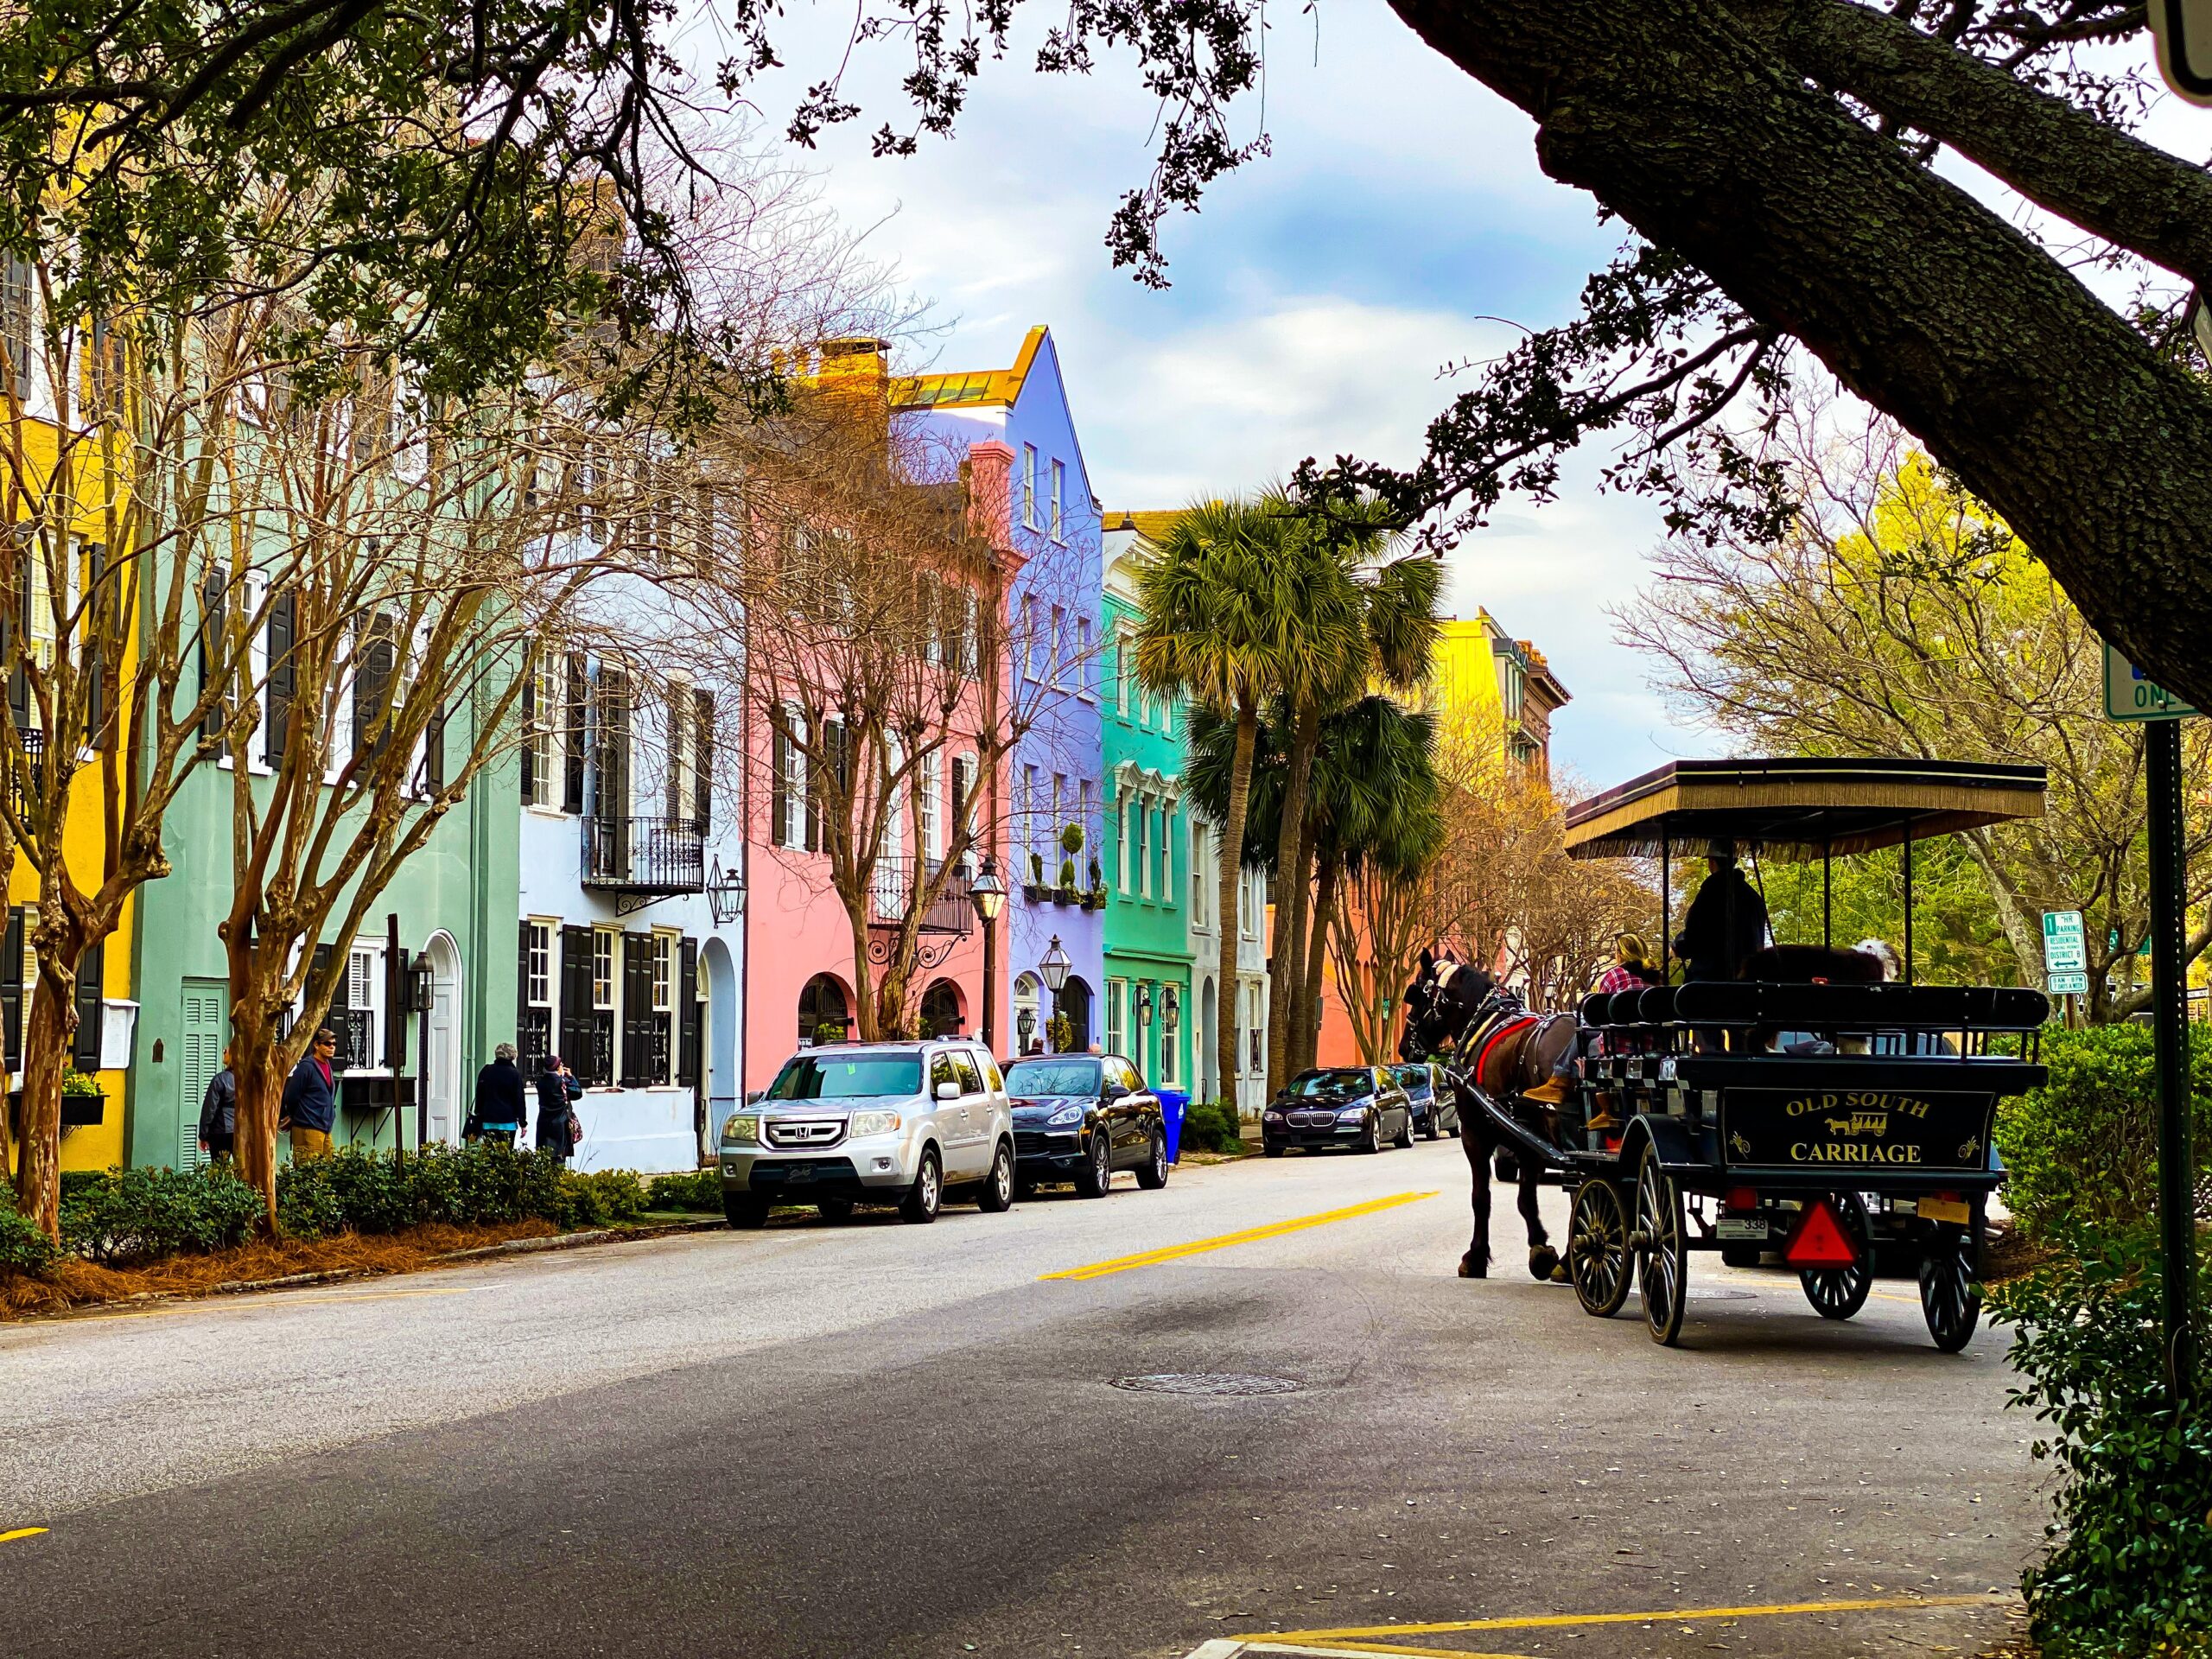 Charleston, South Carolina (Photo Credit: Leonel Heisenberg on Unsplash)